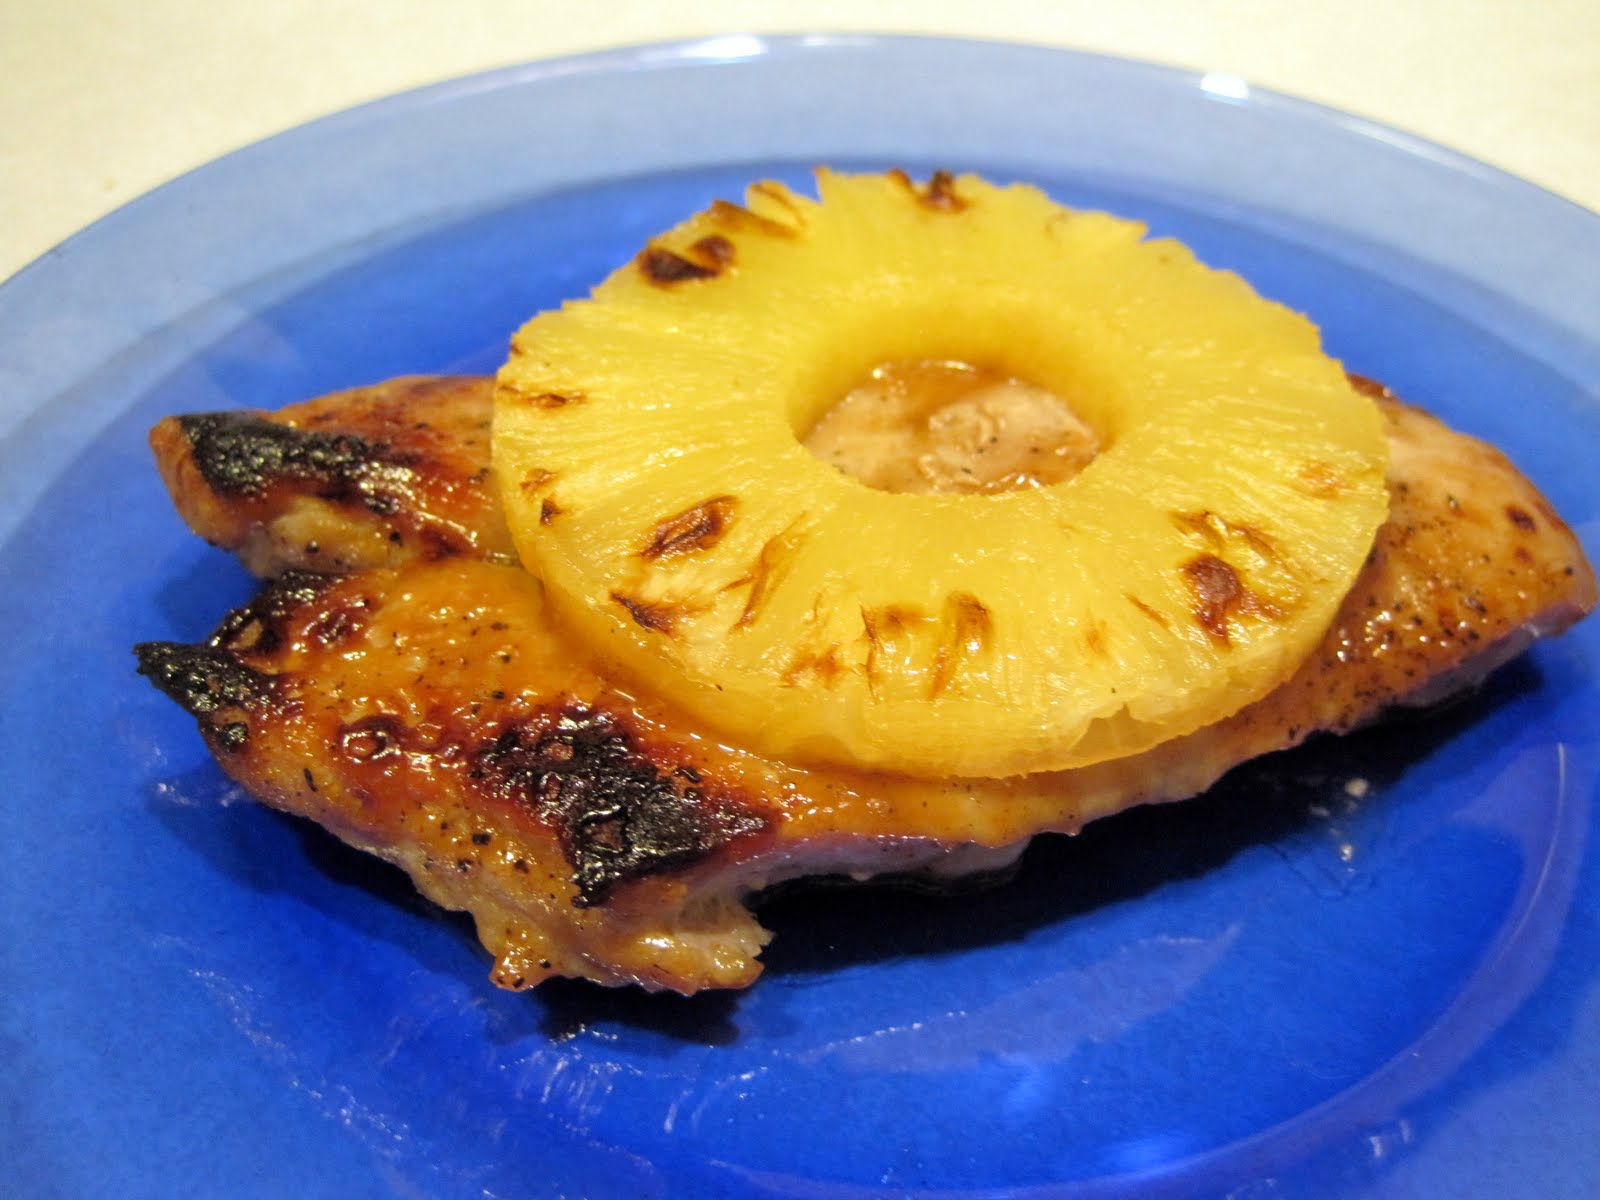 Pineapple Teriyaki Pork Chops, very tasty